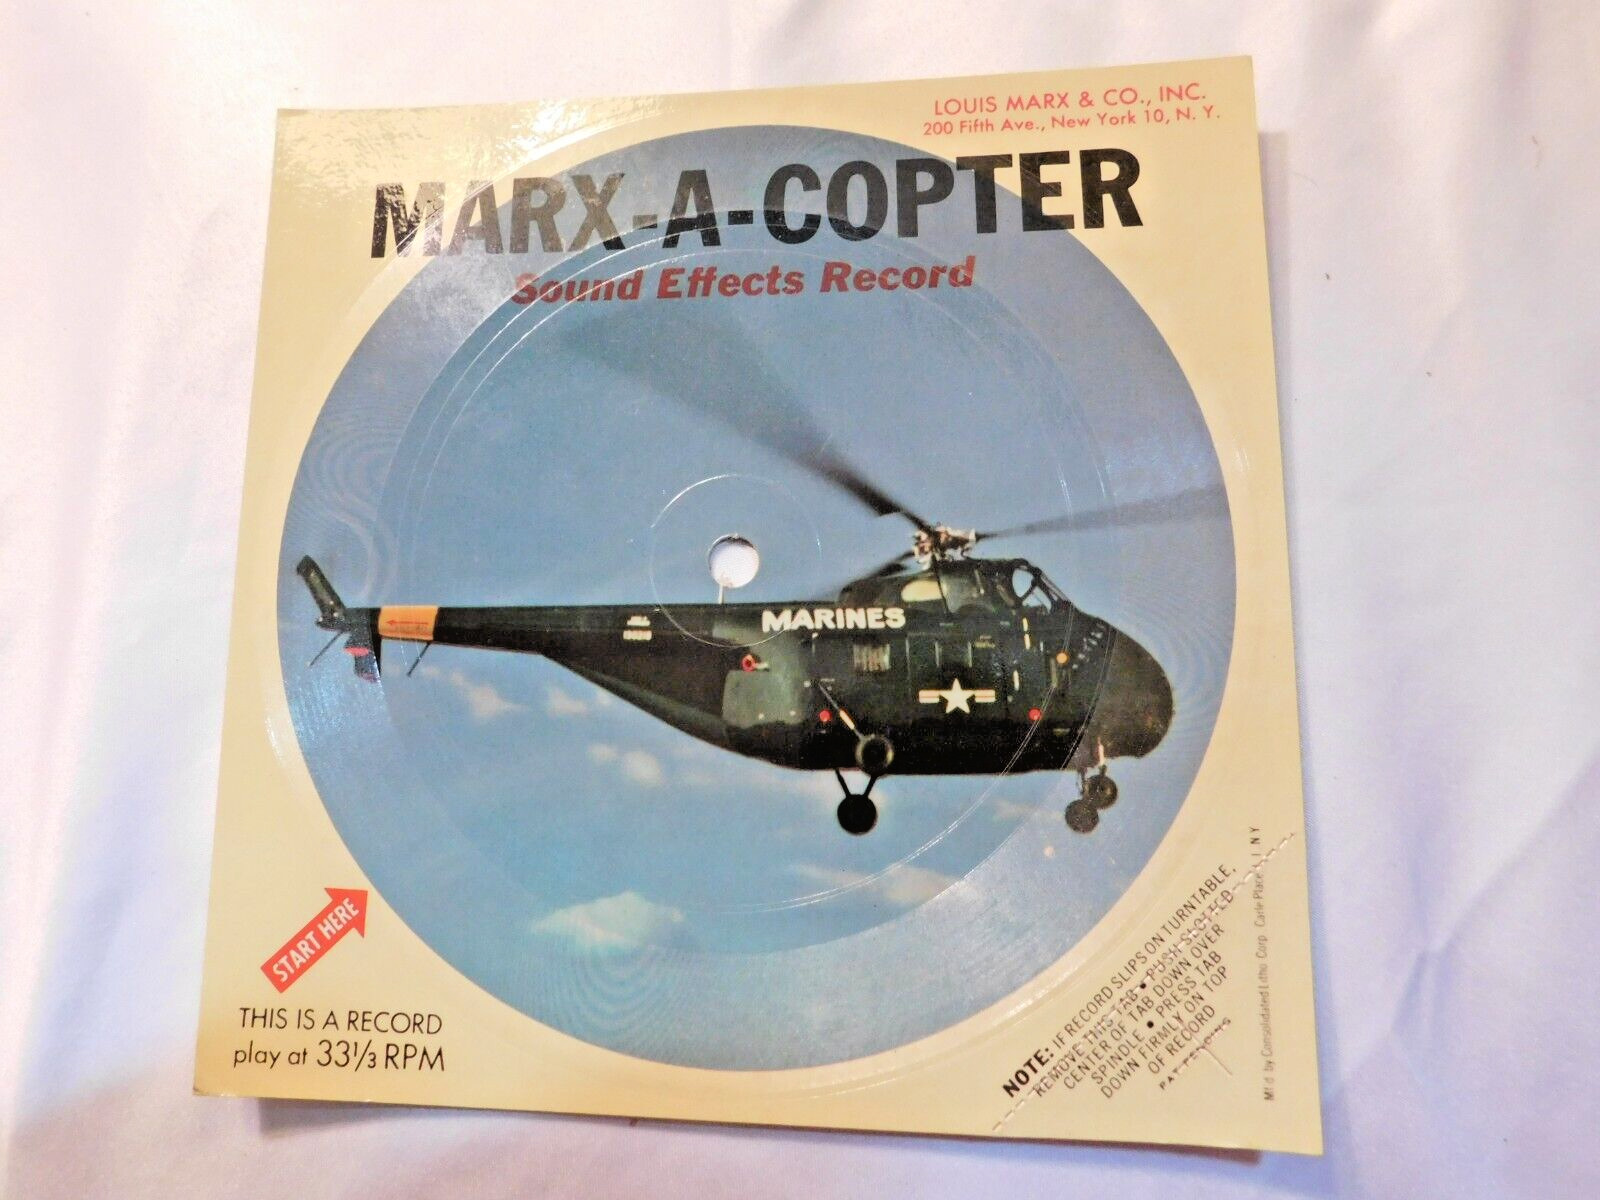 Marx-A-Copter Sound Effects Record 33 1/3 RPM Louis Marx & Co. Vintage